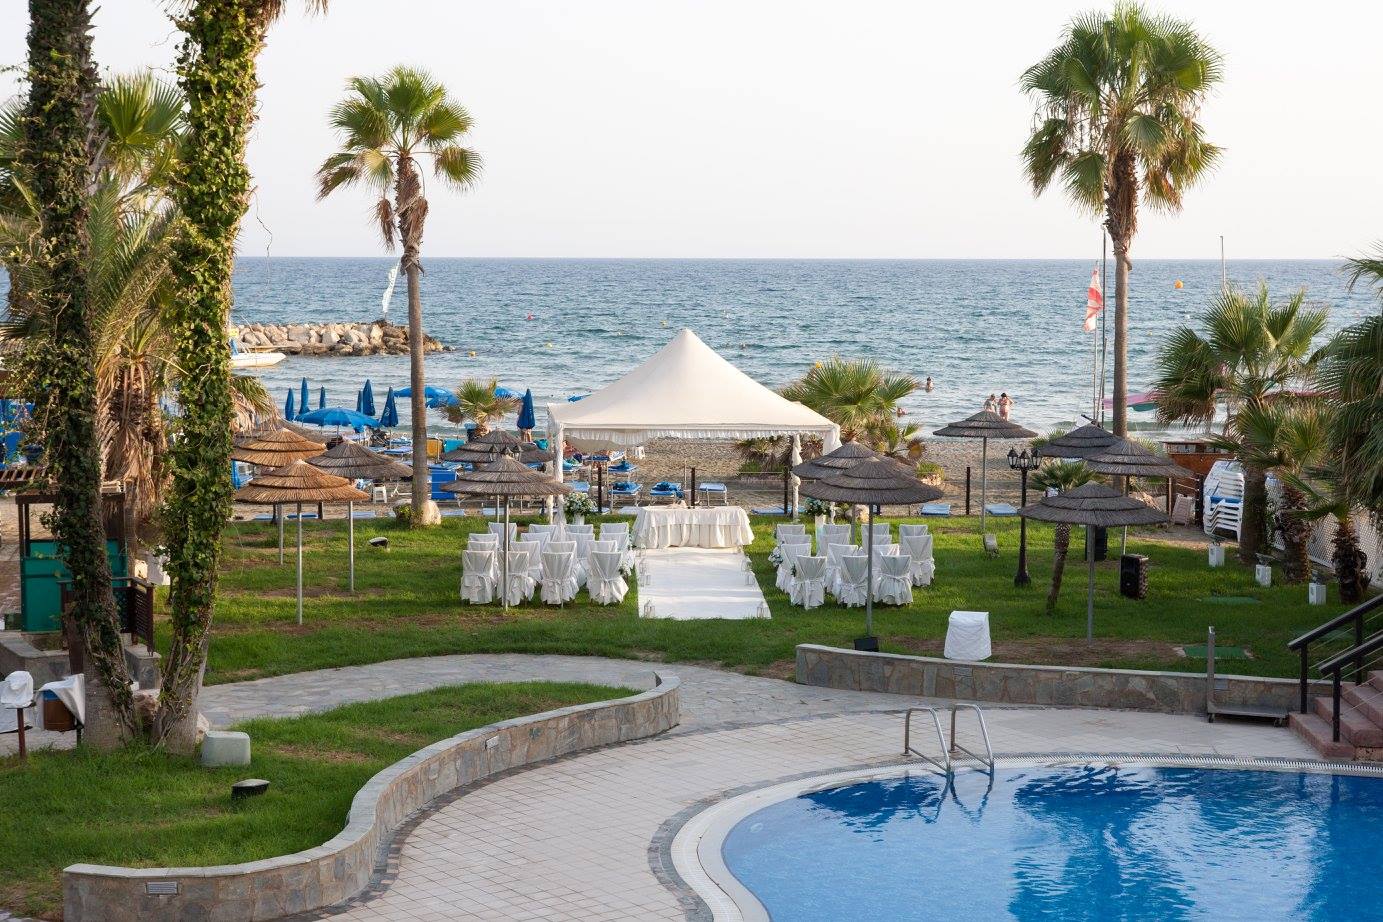 Book your wedding day in Lordos Beach Hotel Larnaca